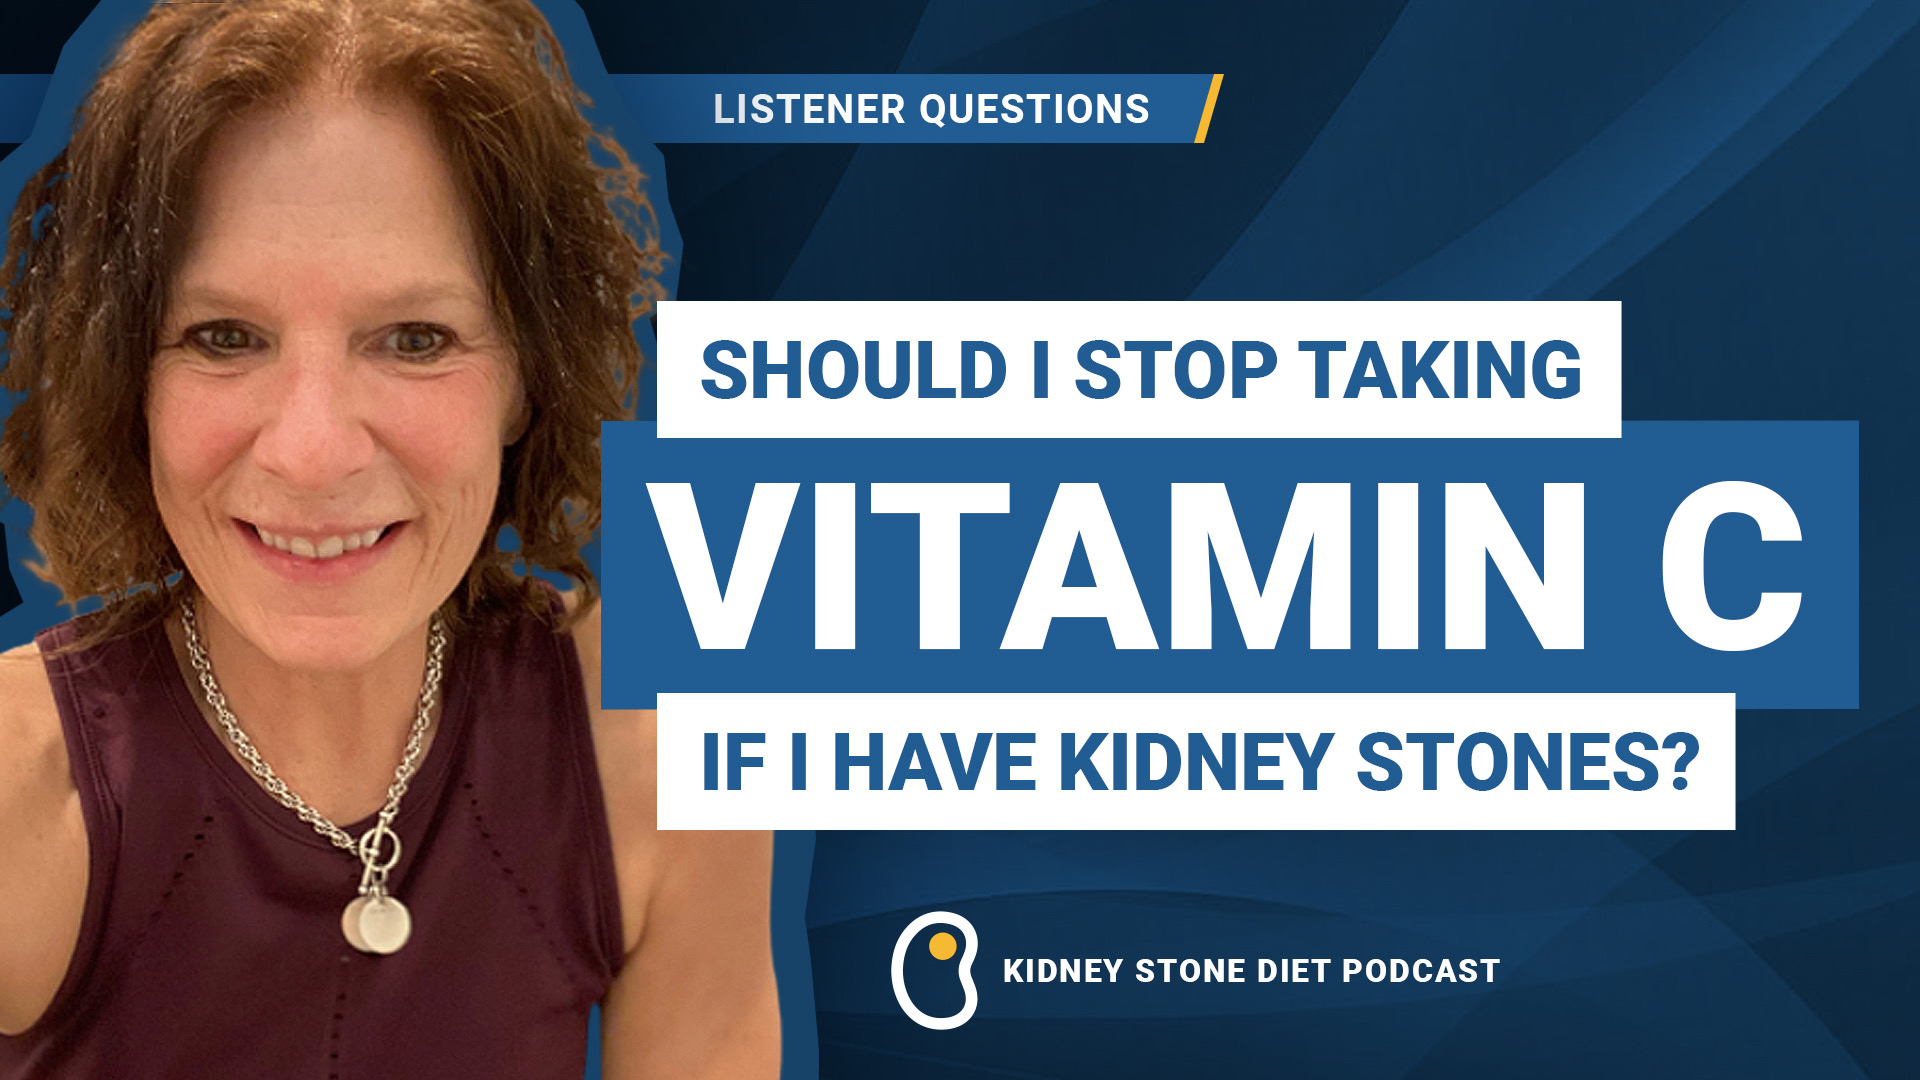 Should I stop taking vitamin C if I have kidney stones?